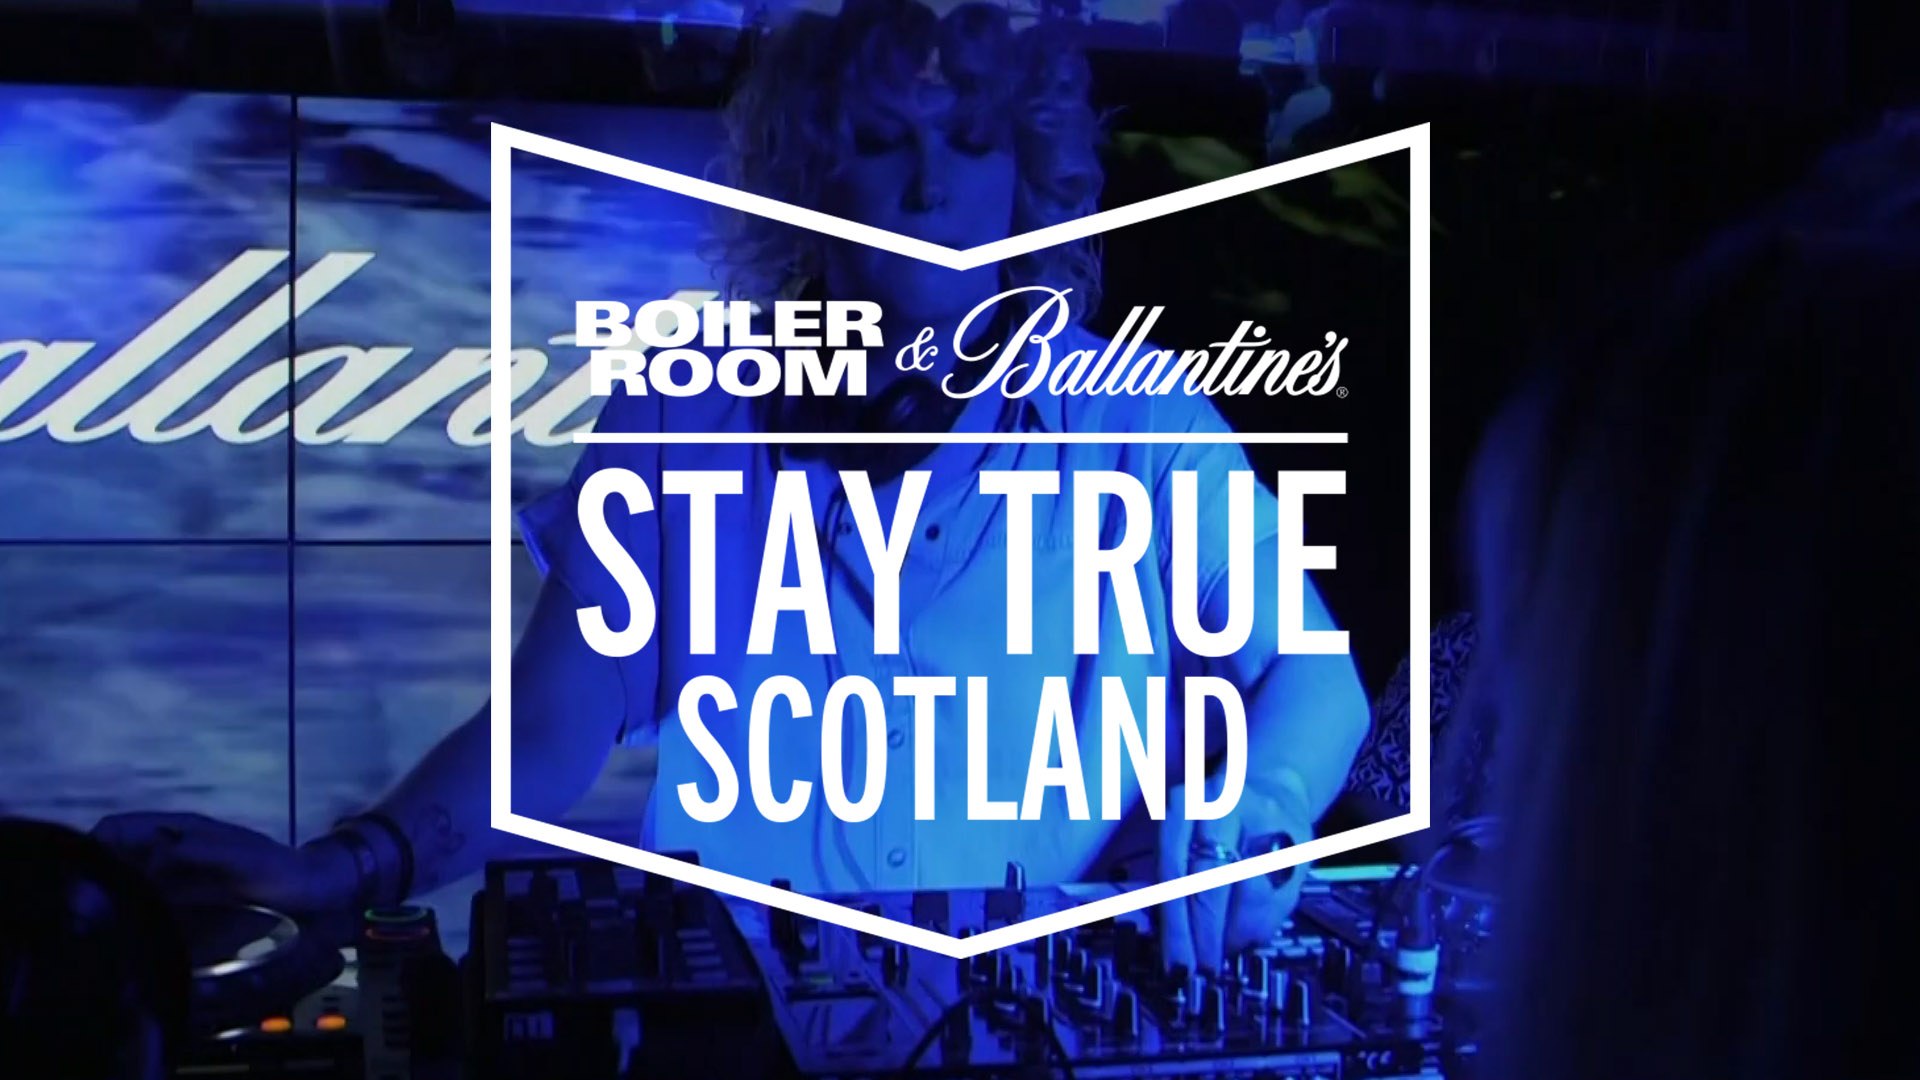 Spuug uit Paradox filosoof Maya Jane Coles Boiler Room & Ballantine's Stay True Scotland DJ Set -  video Dailymotion